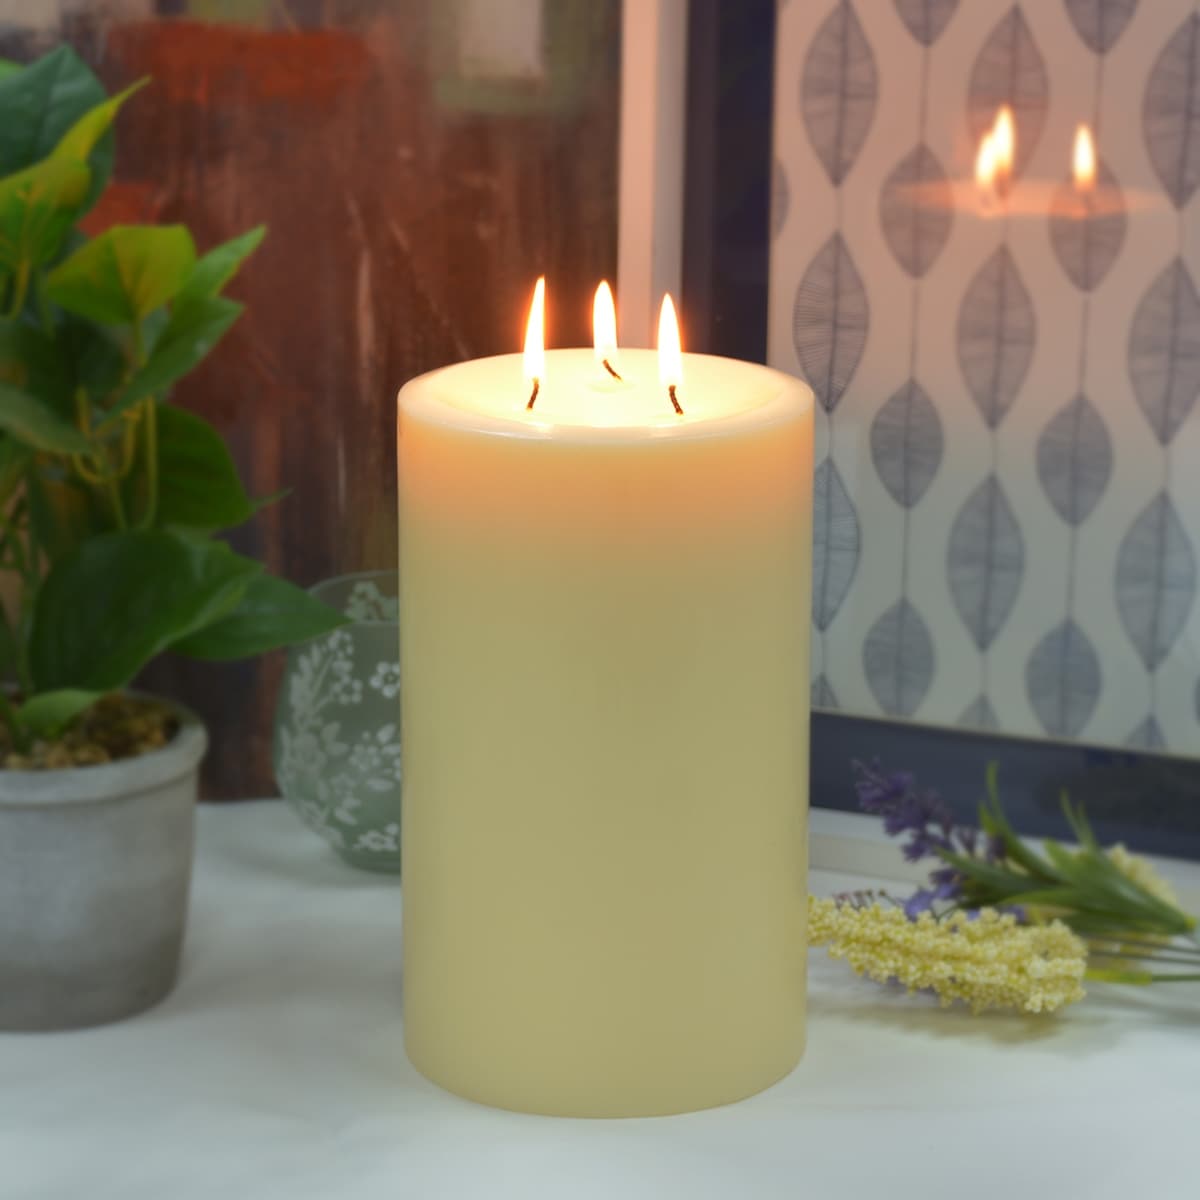 Candle Impressions 4-Scent Wax Melt Assortment, Size: 3L x 2.25W x 1H